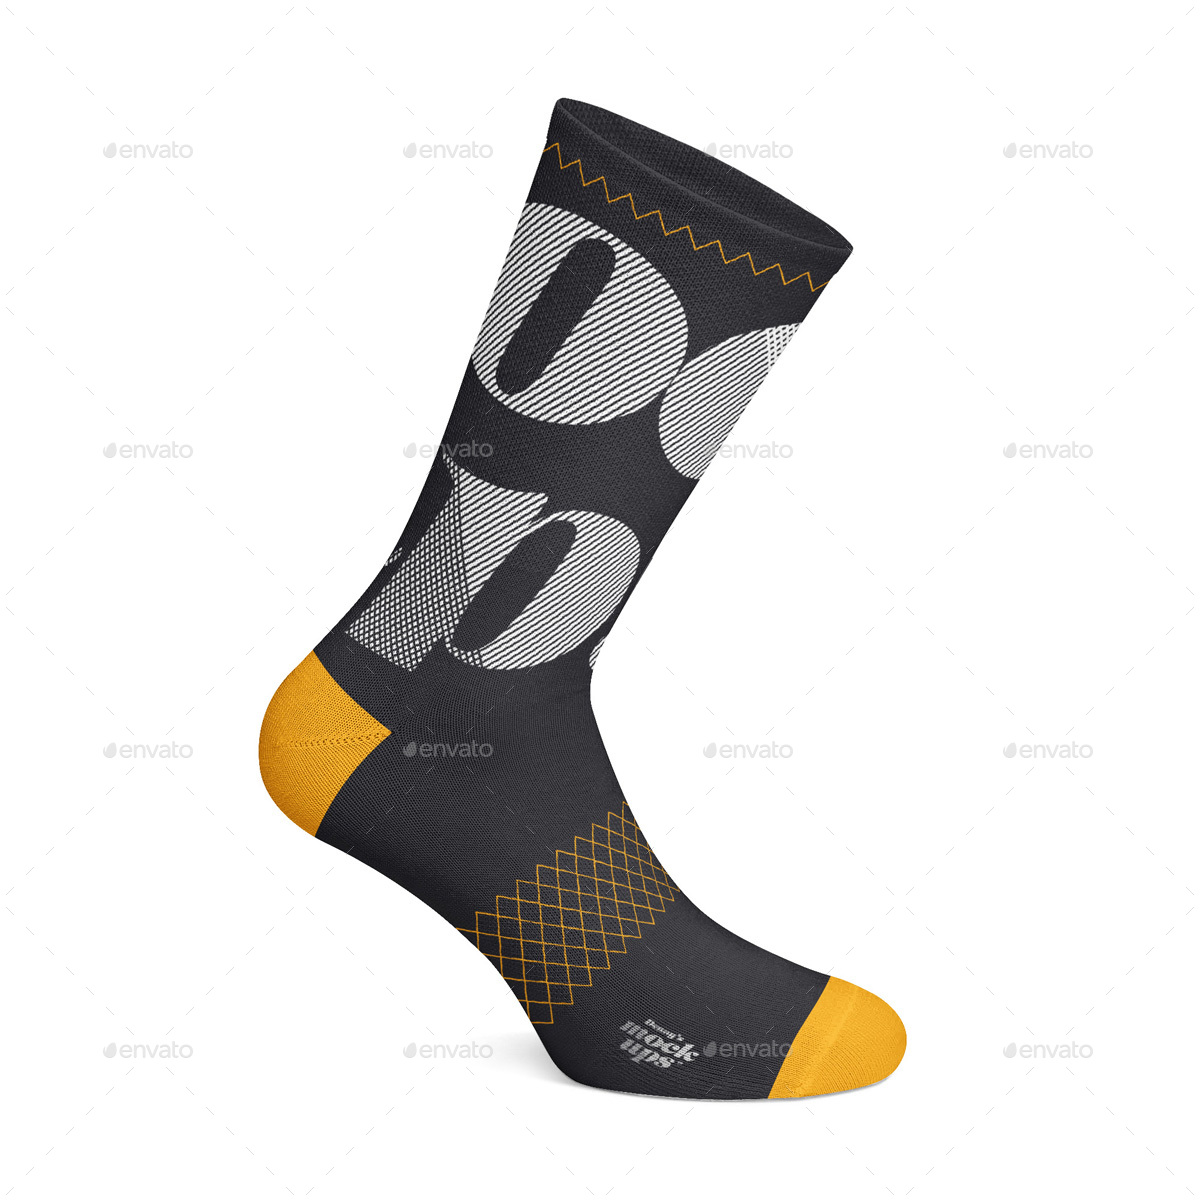 Download Cycling Socks 3 Types Mockup by dennysmockups | GraphicRiver